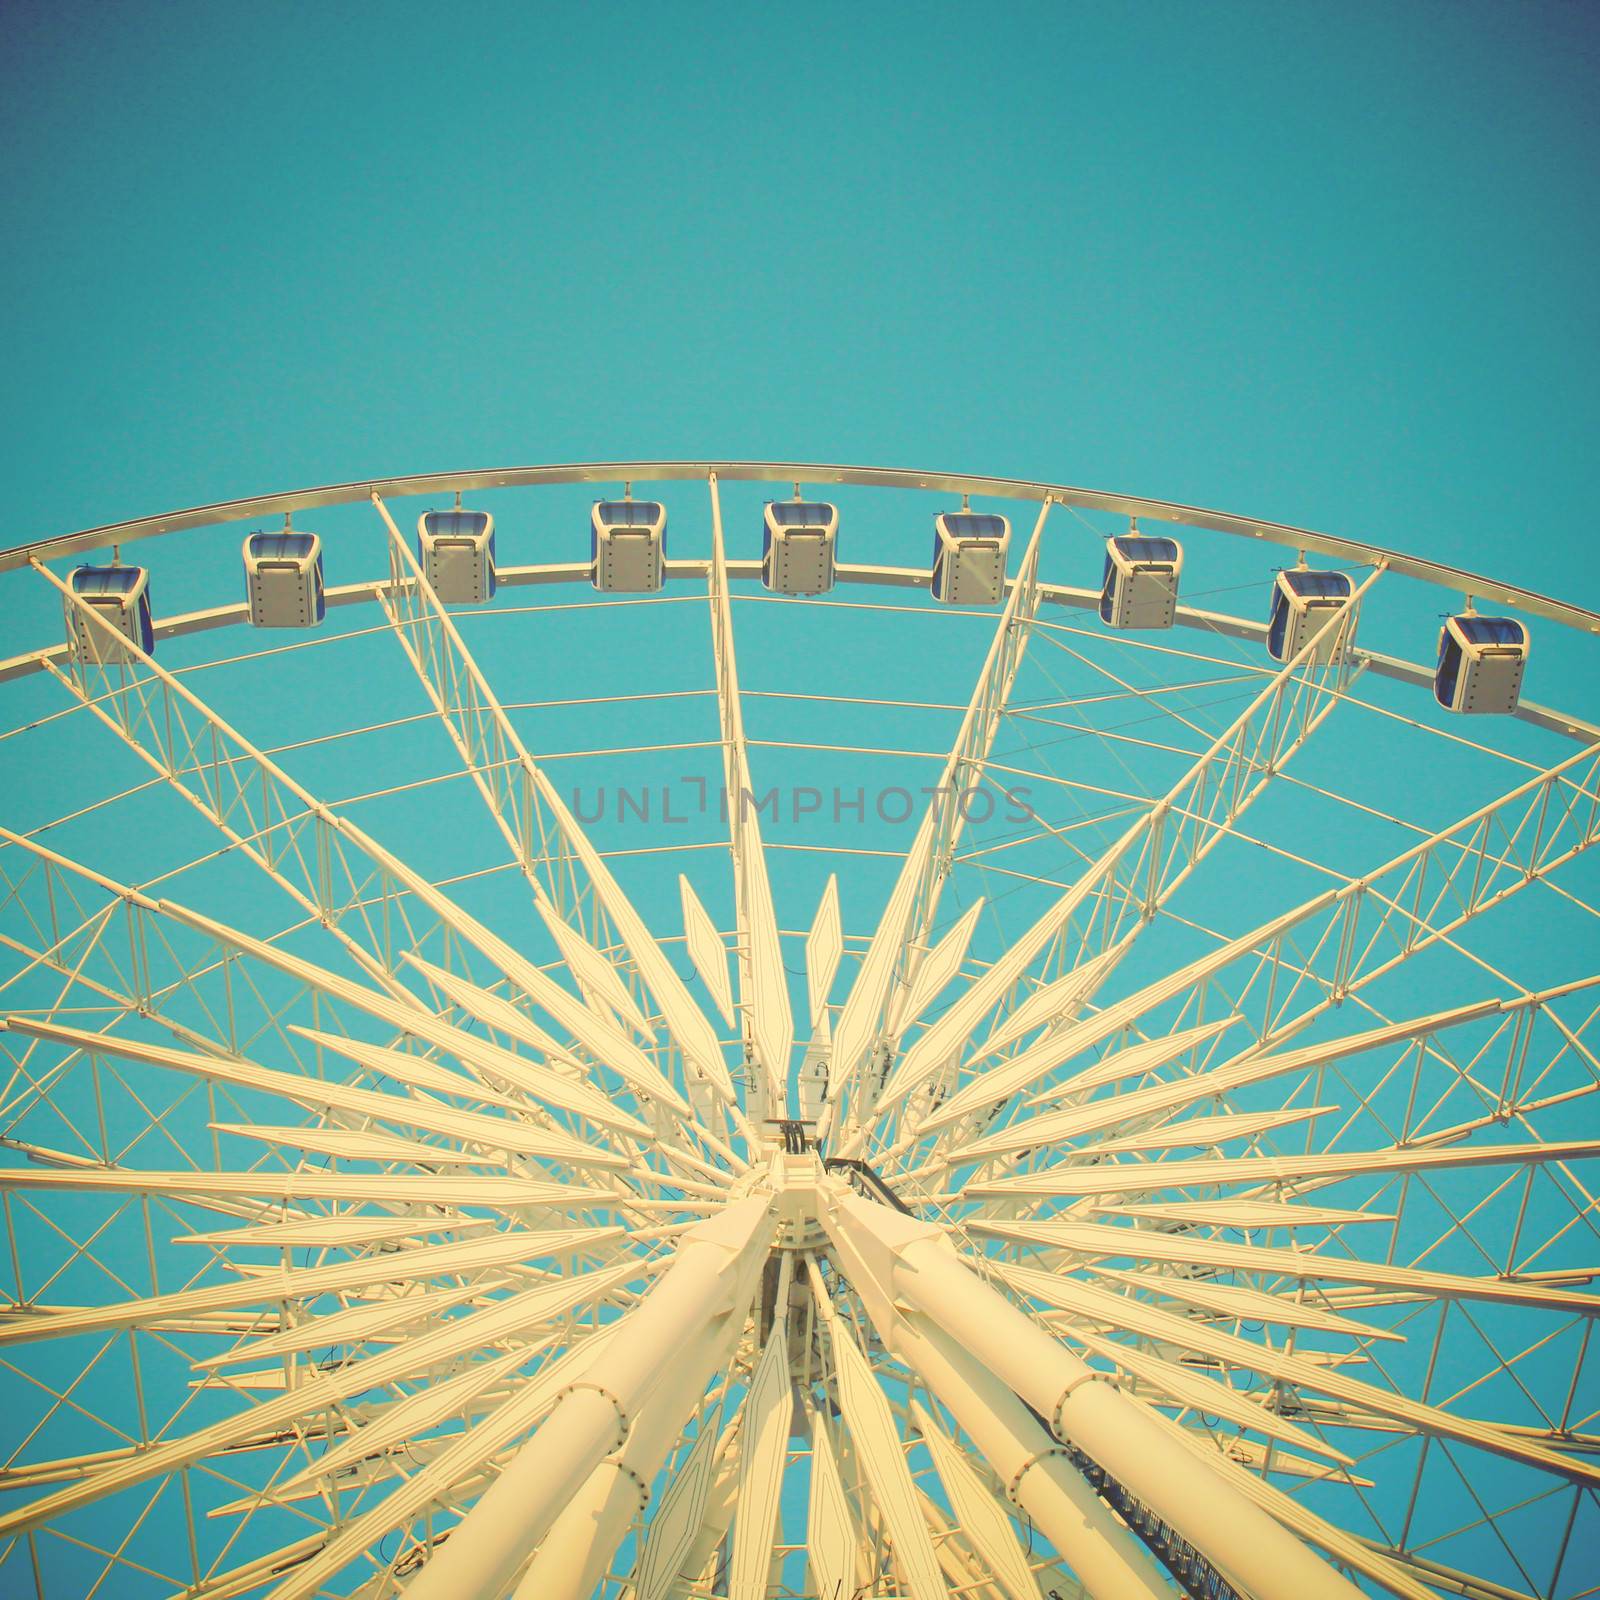 Ferris wheel with retro filter effect by nuchylee